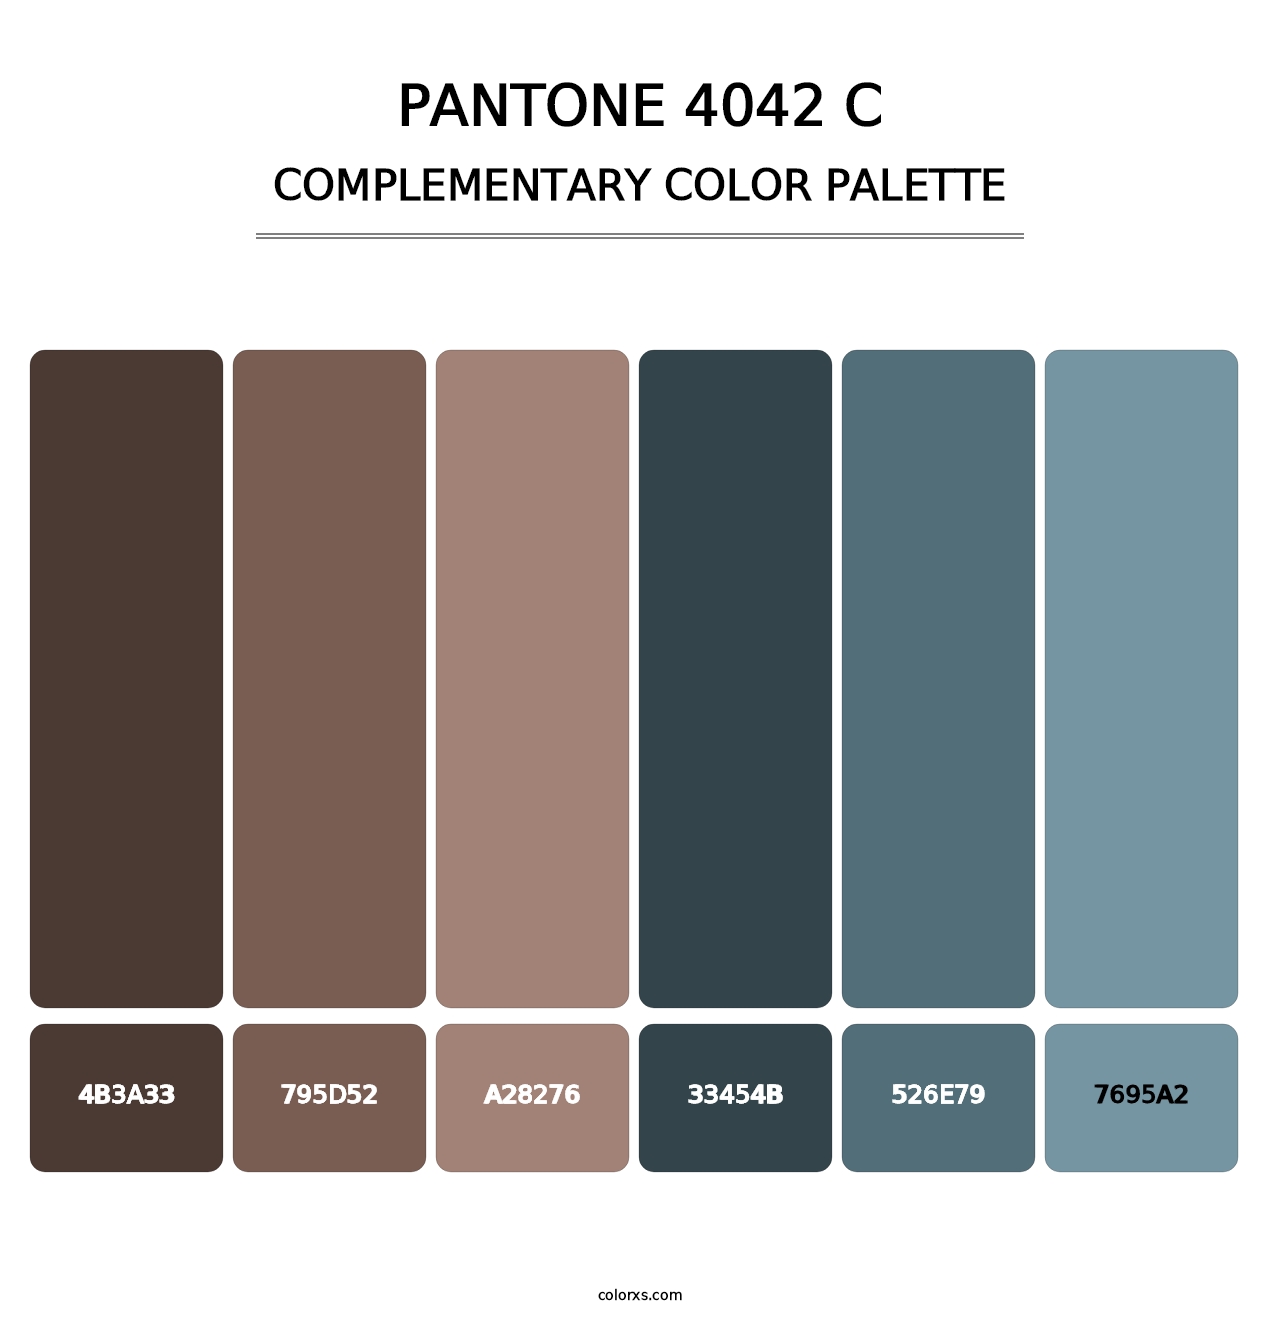 PANTONE 4042 C - Complementary Color Palette